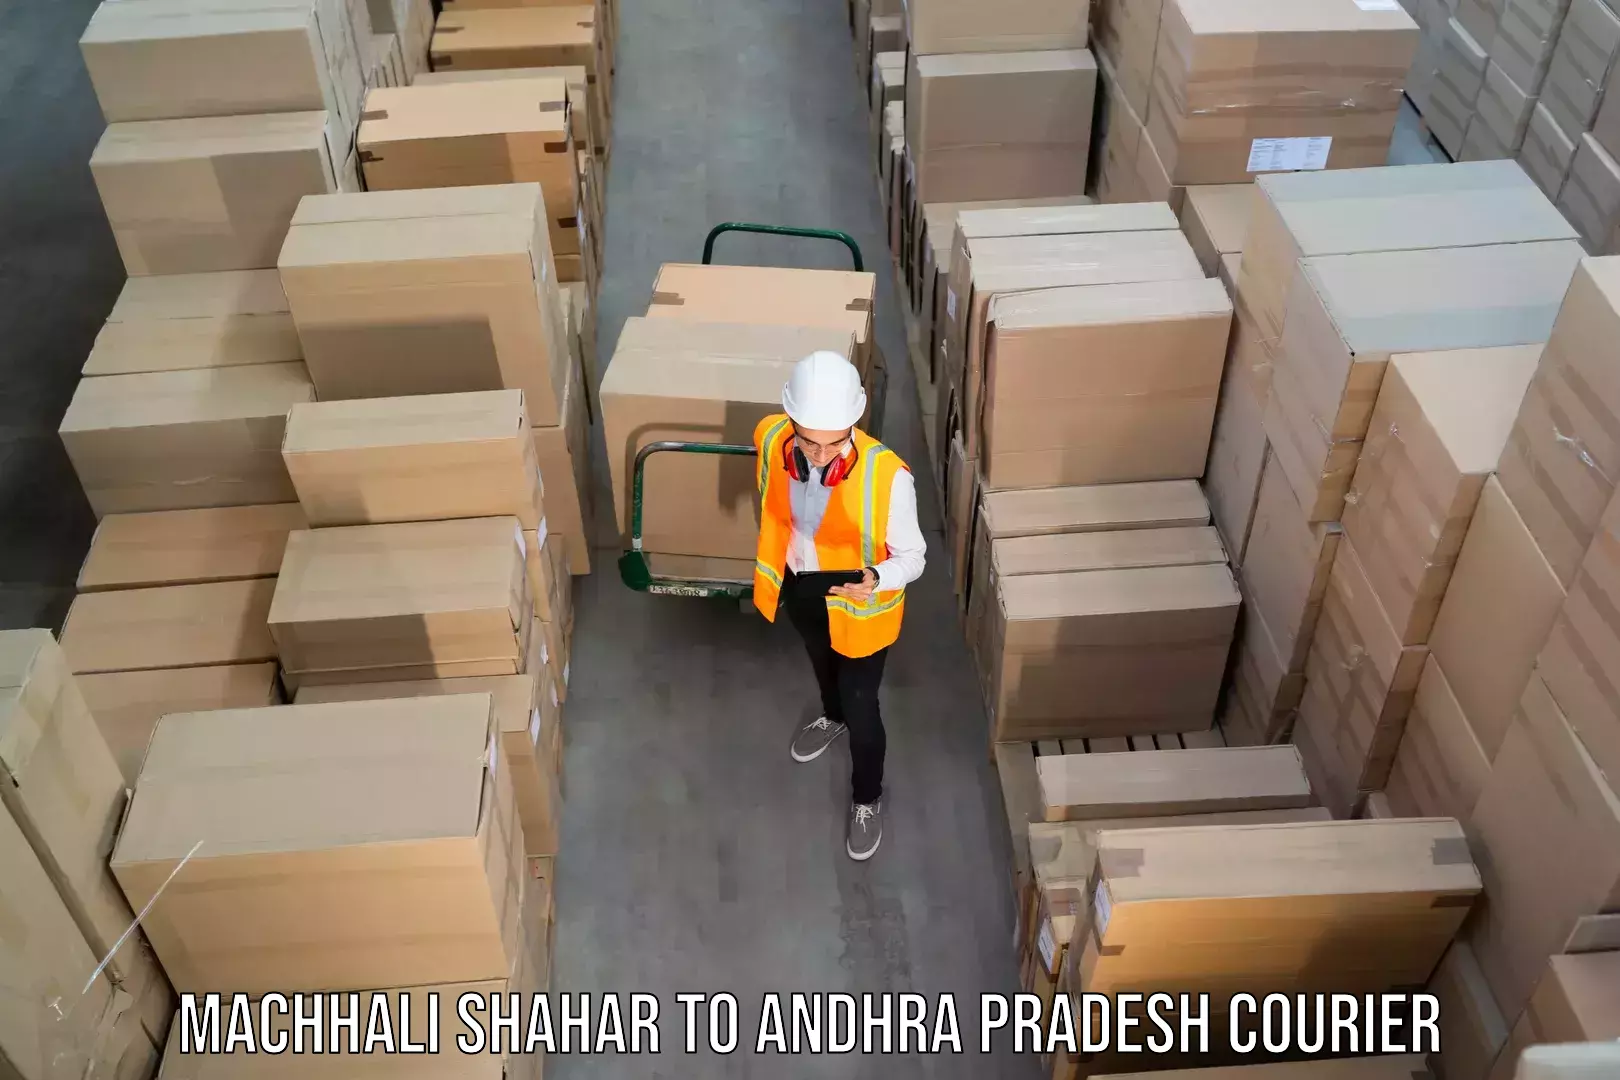 Digital courier platforms Machhali Shahar to Gullapalli